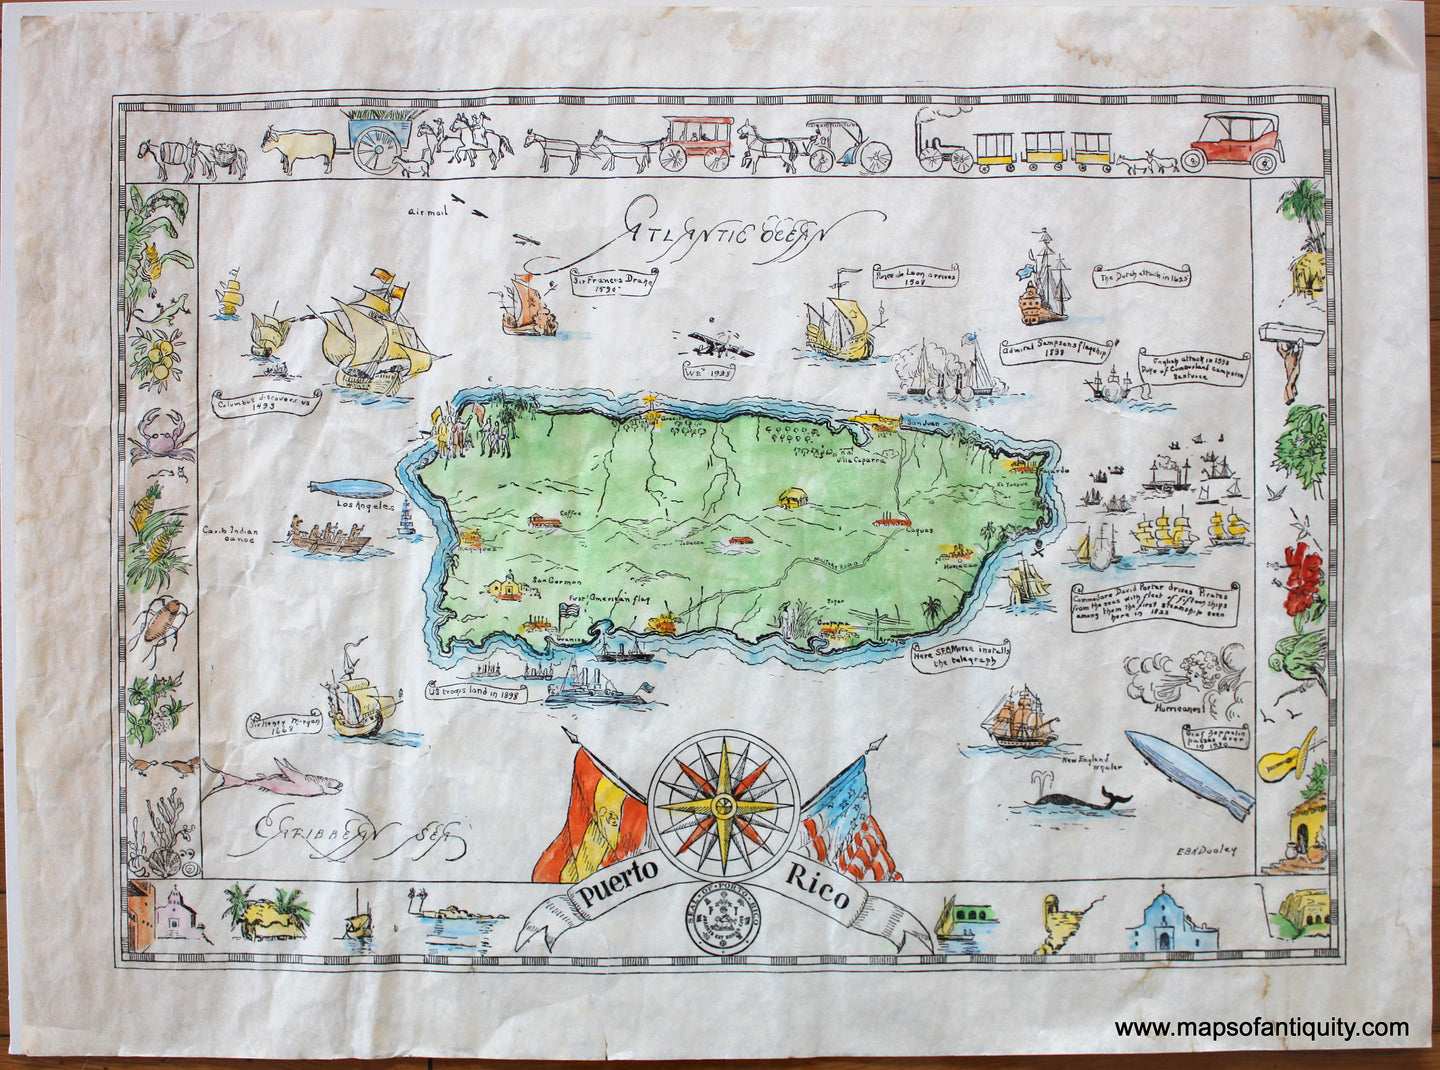 Antique-Map-Puerto-Rico-Dooley-Pictorial-Tourist-1931-1930s-1900s-20th-century-Maps-of-Antiquity